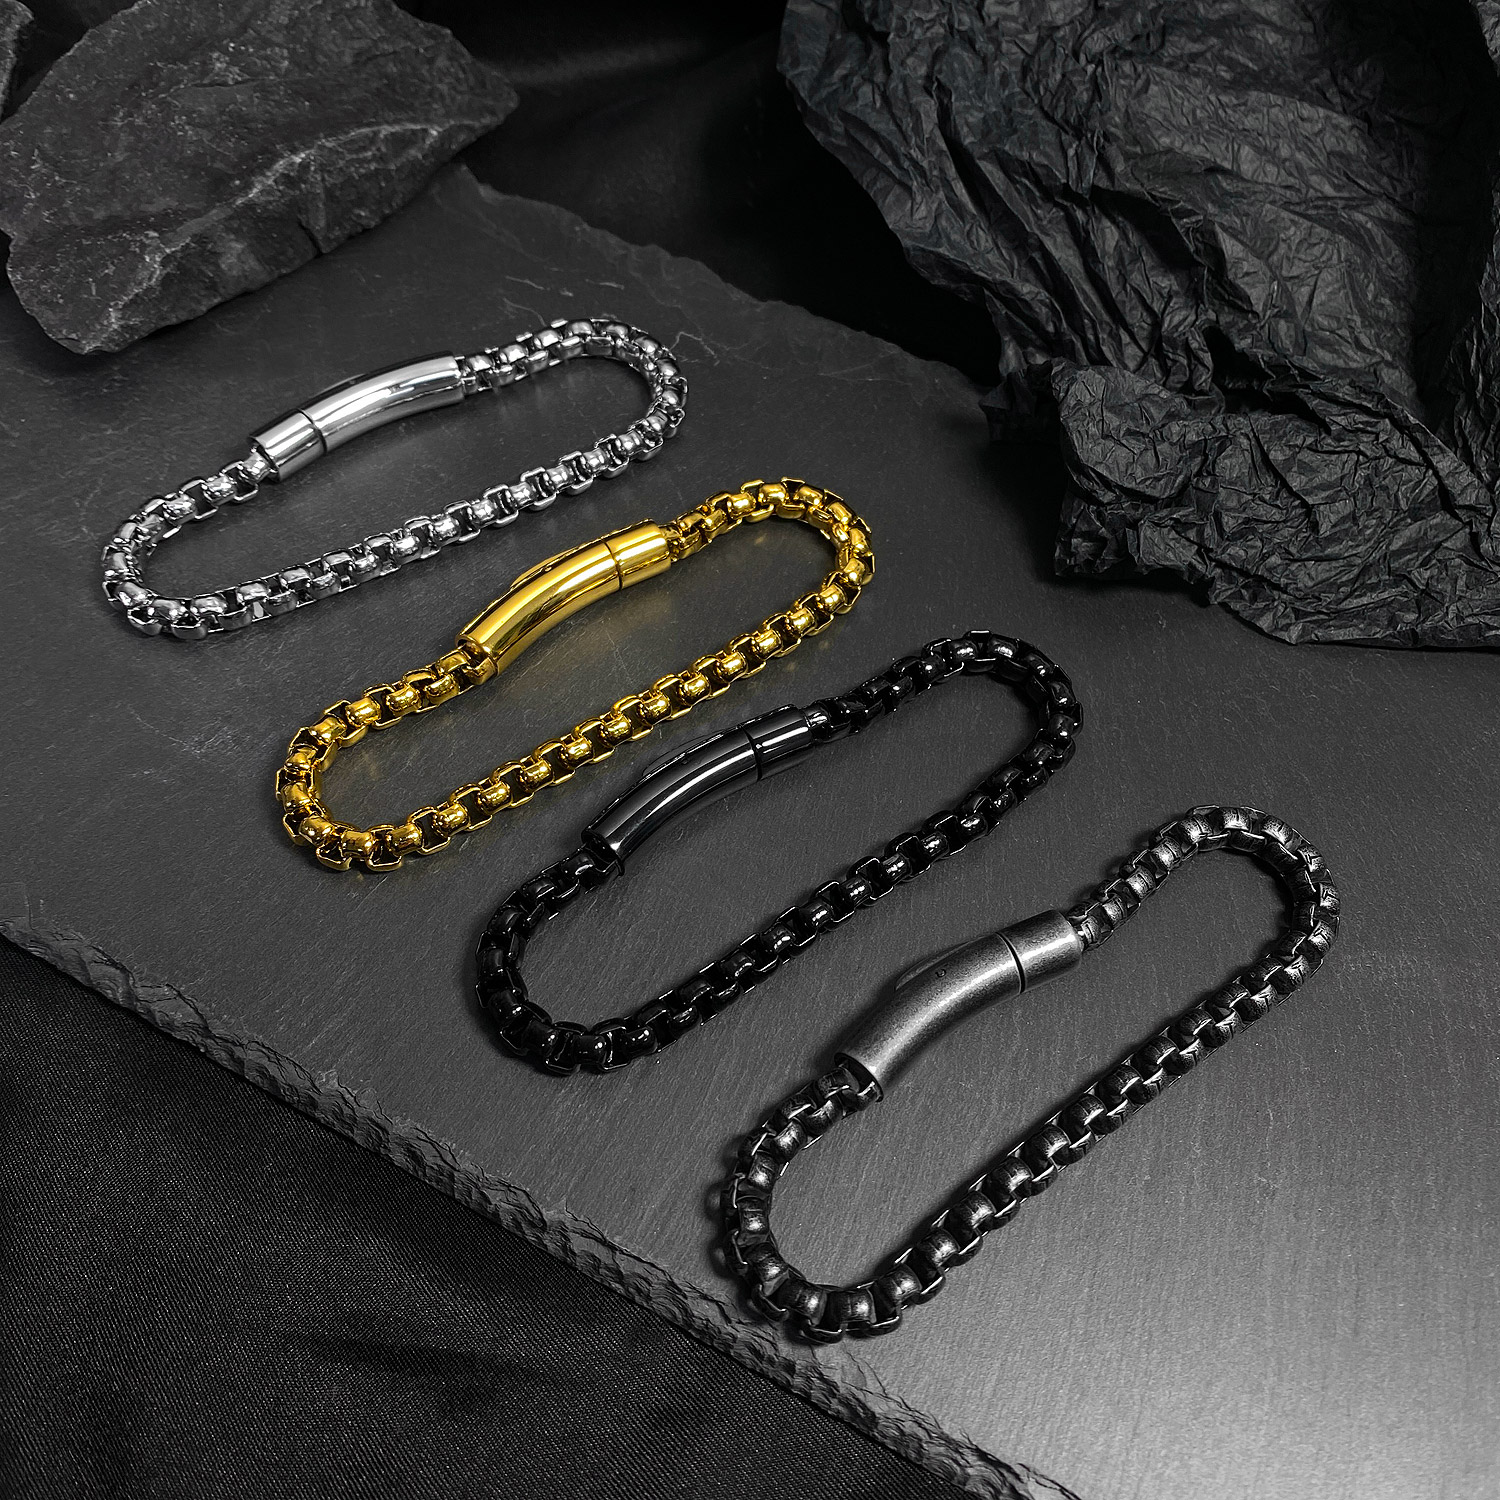 Colored Leather Bracelets